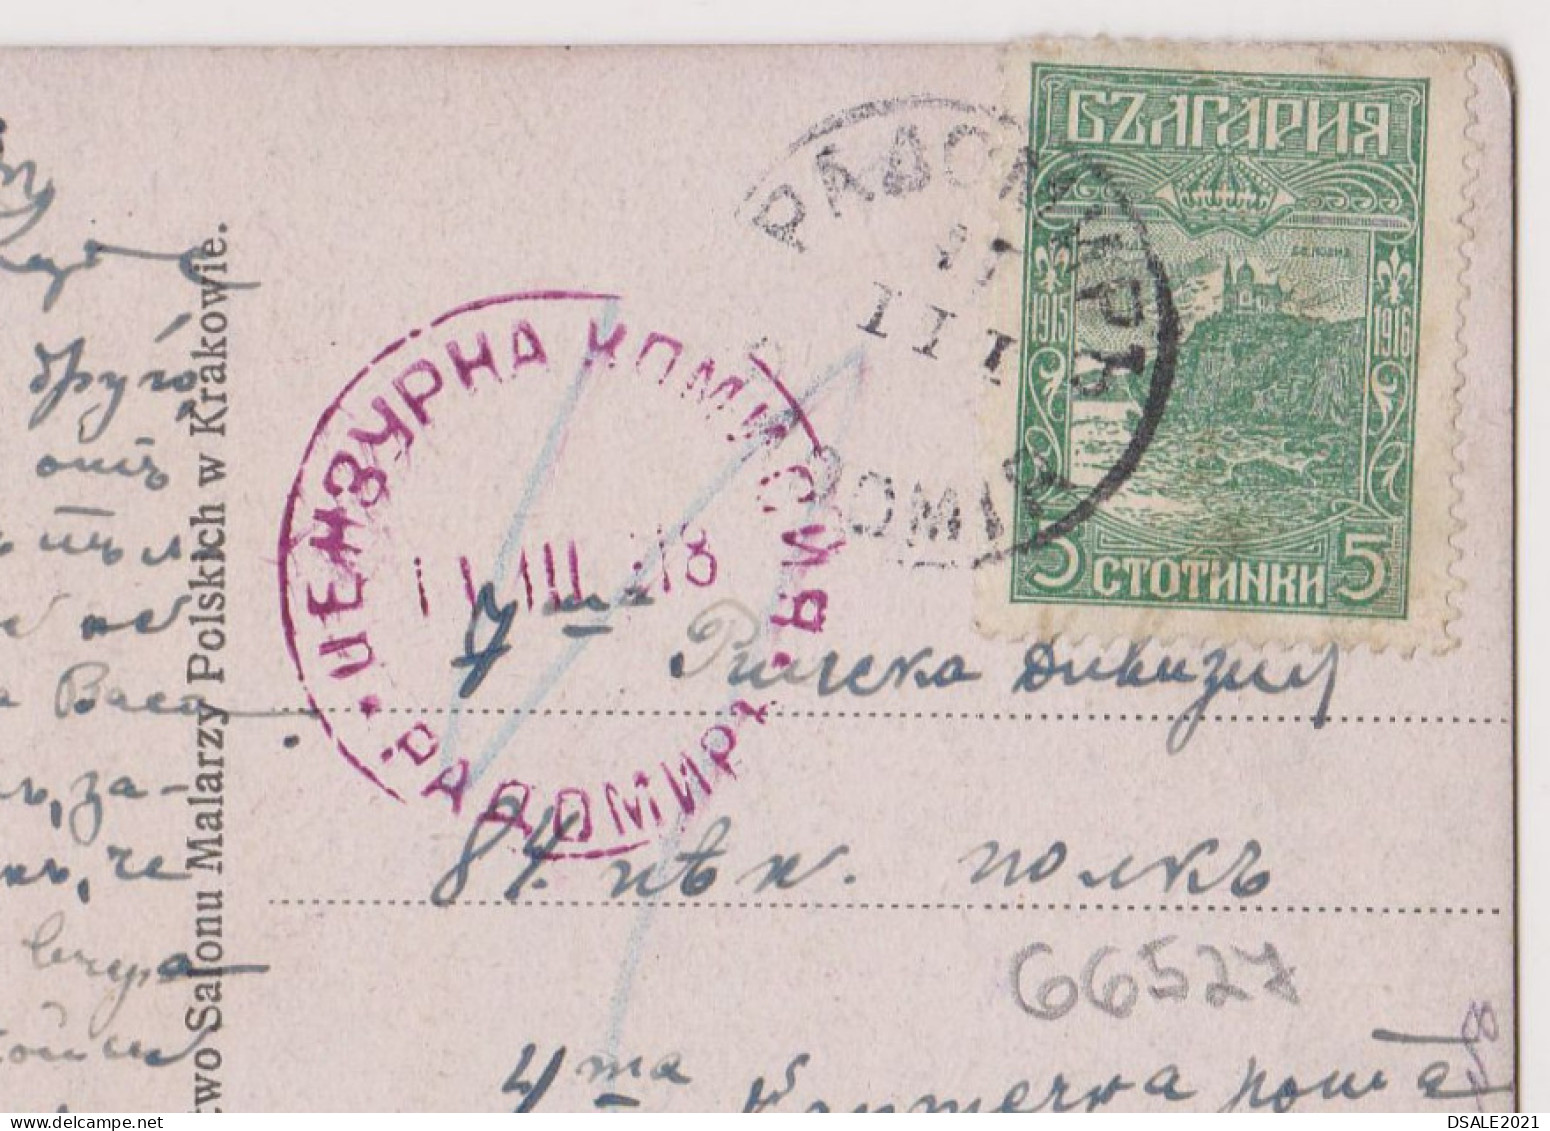 Bulgaria Bulgarien Ww1-1918 Civil Censored RADOMIR Cachet Artist Postcard By K. Szczawinski Boy W/Violin Postcard /66527 - Guerre